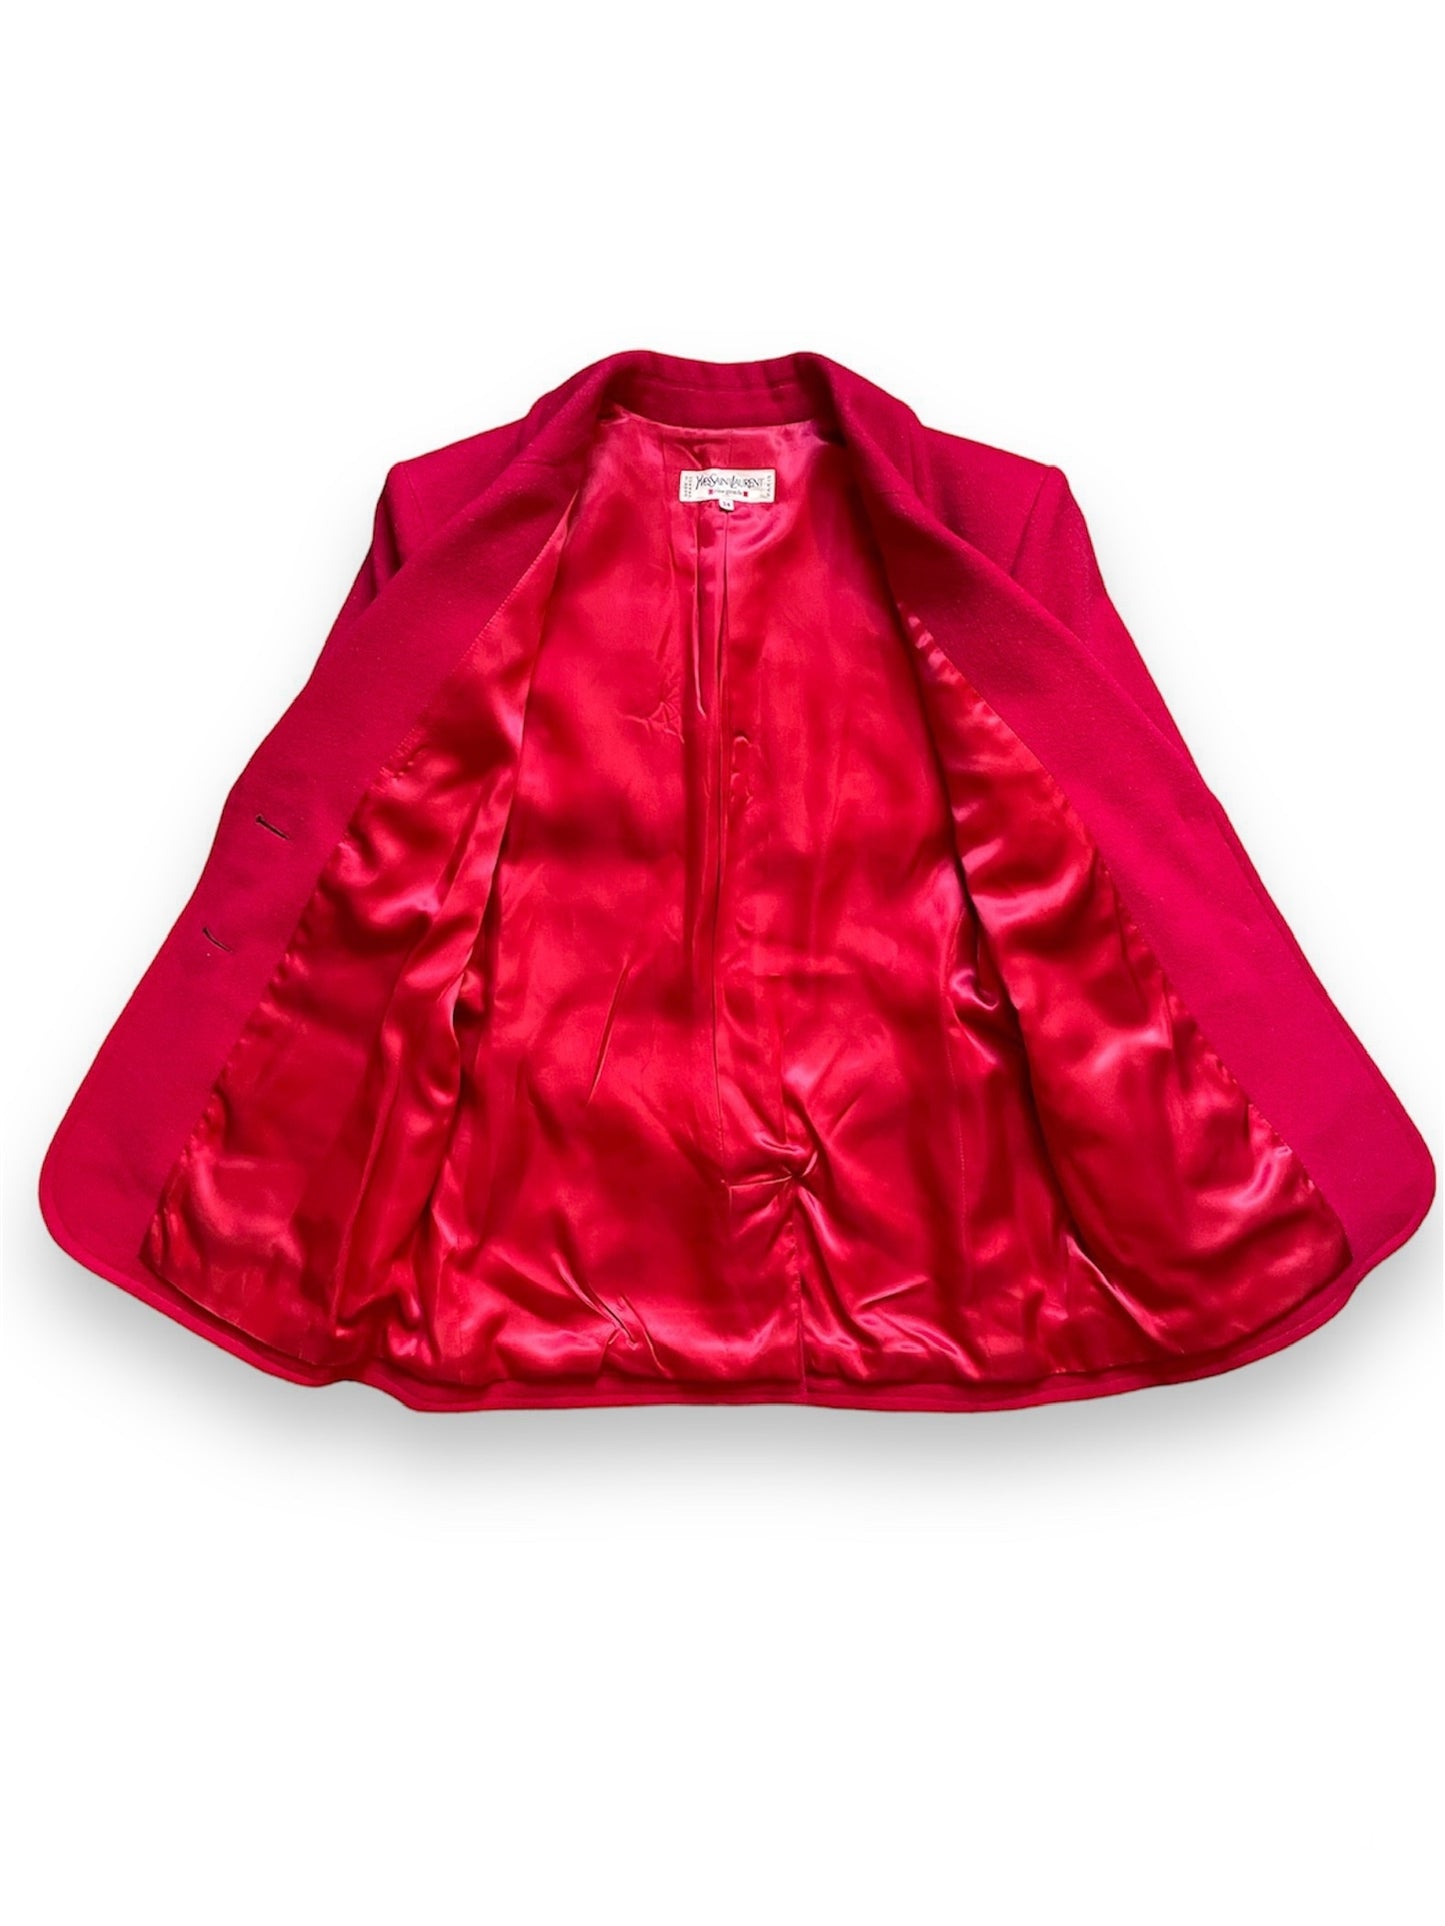 Veste de blazer Yves Saint Laurent rose taille 34 FR.